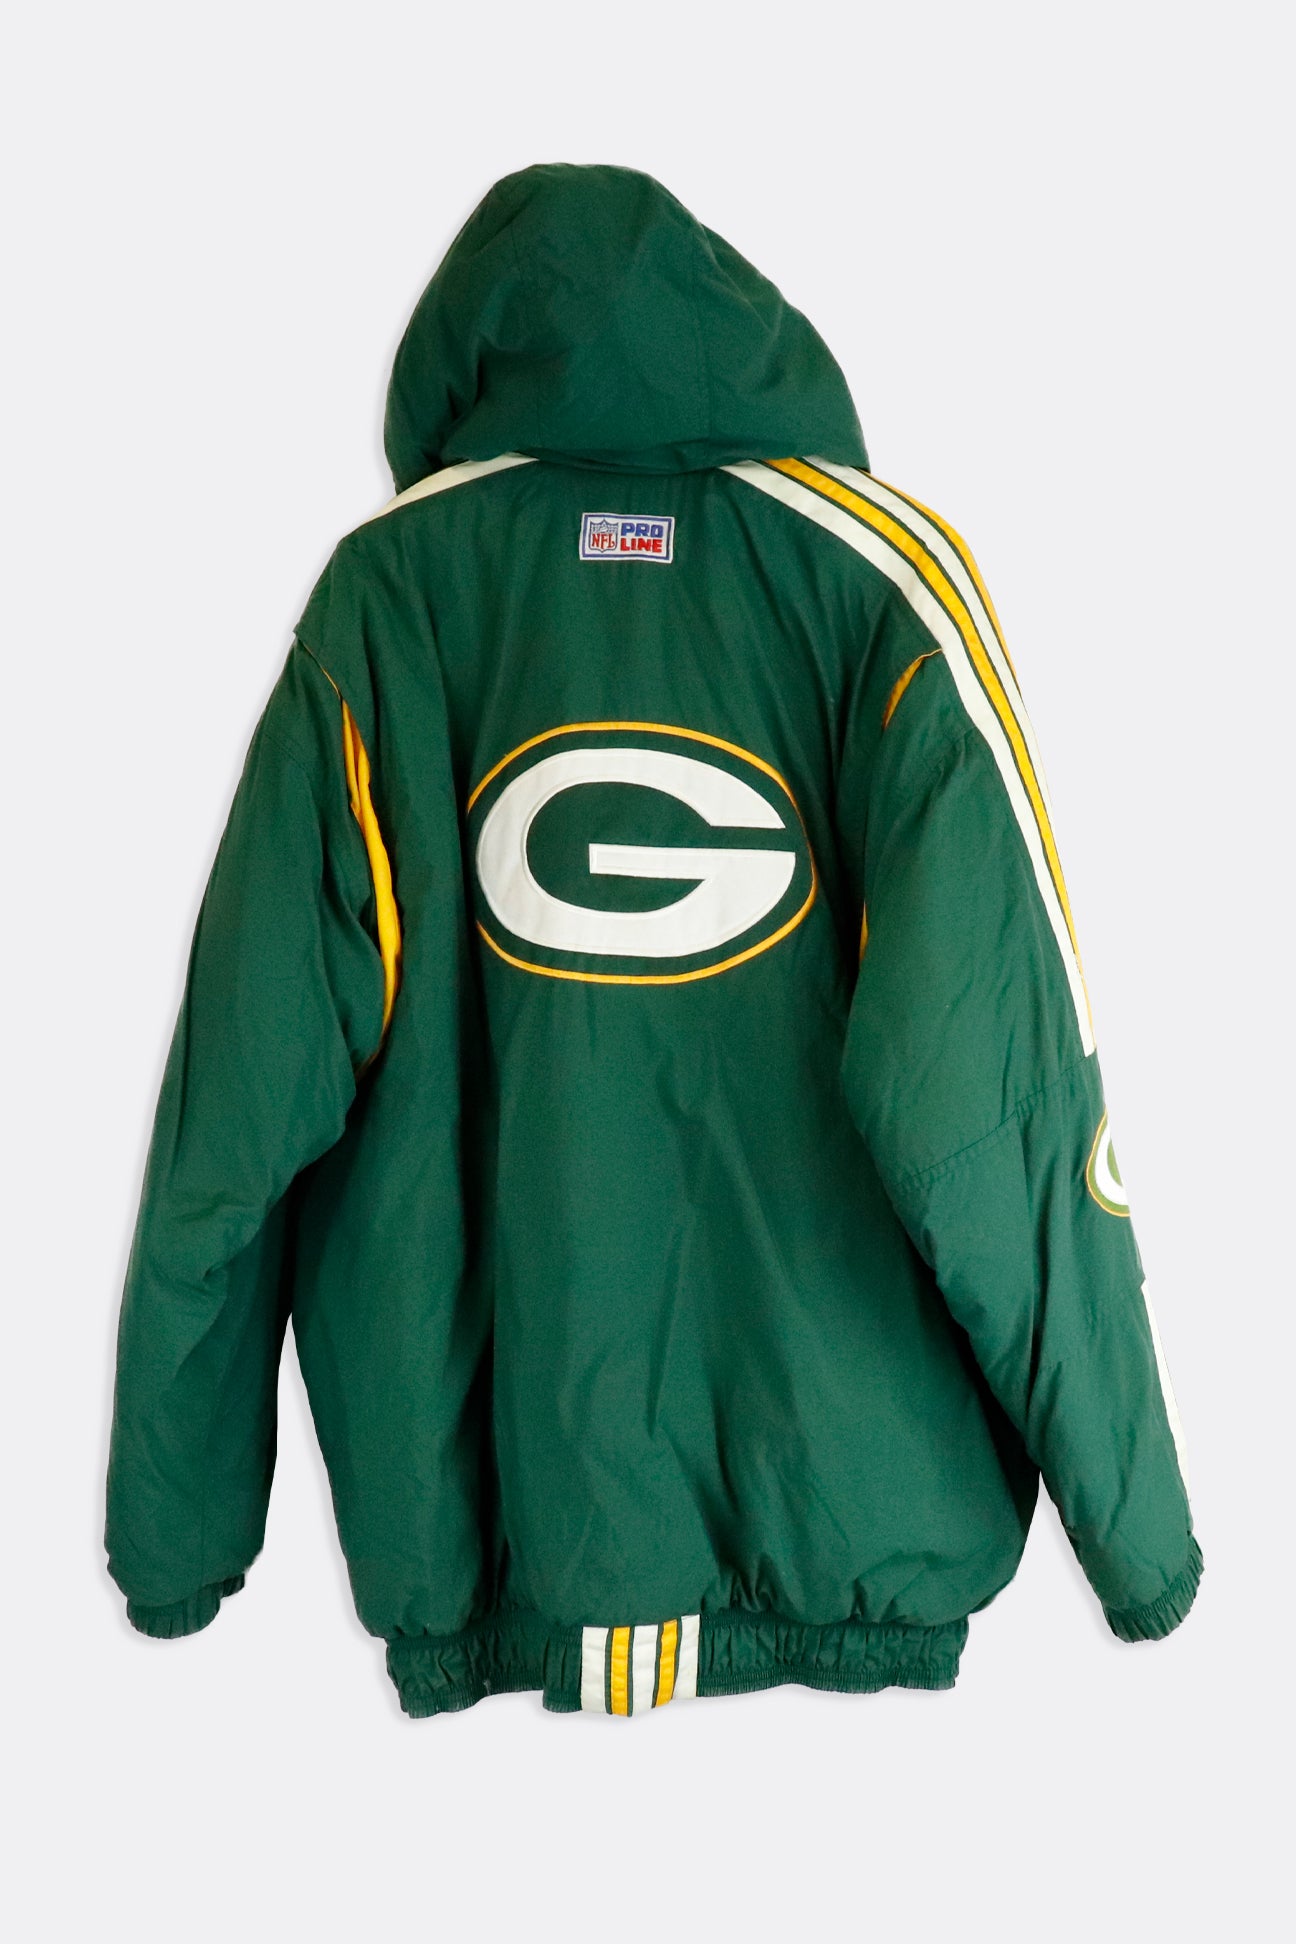 green bay packers coat